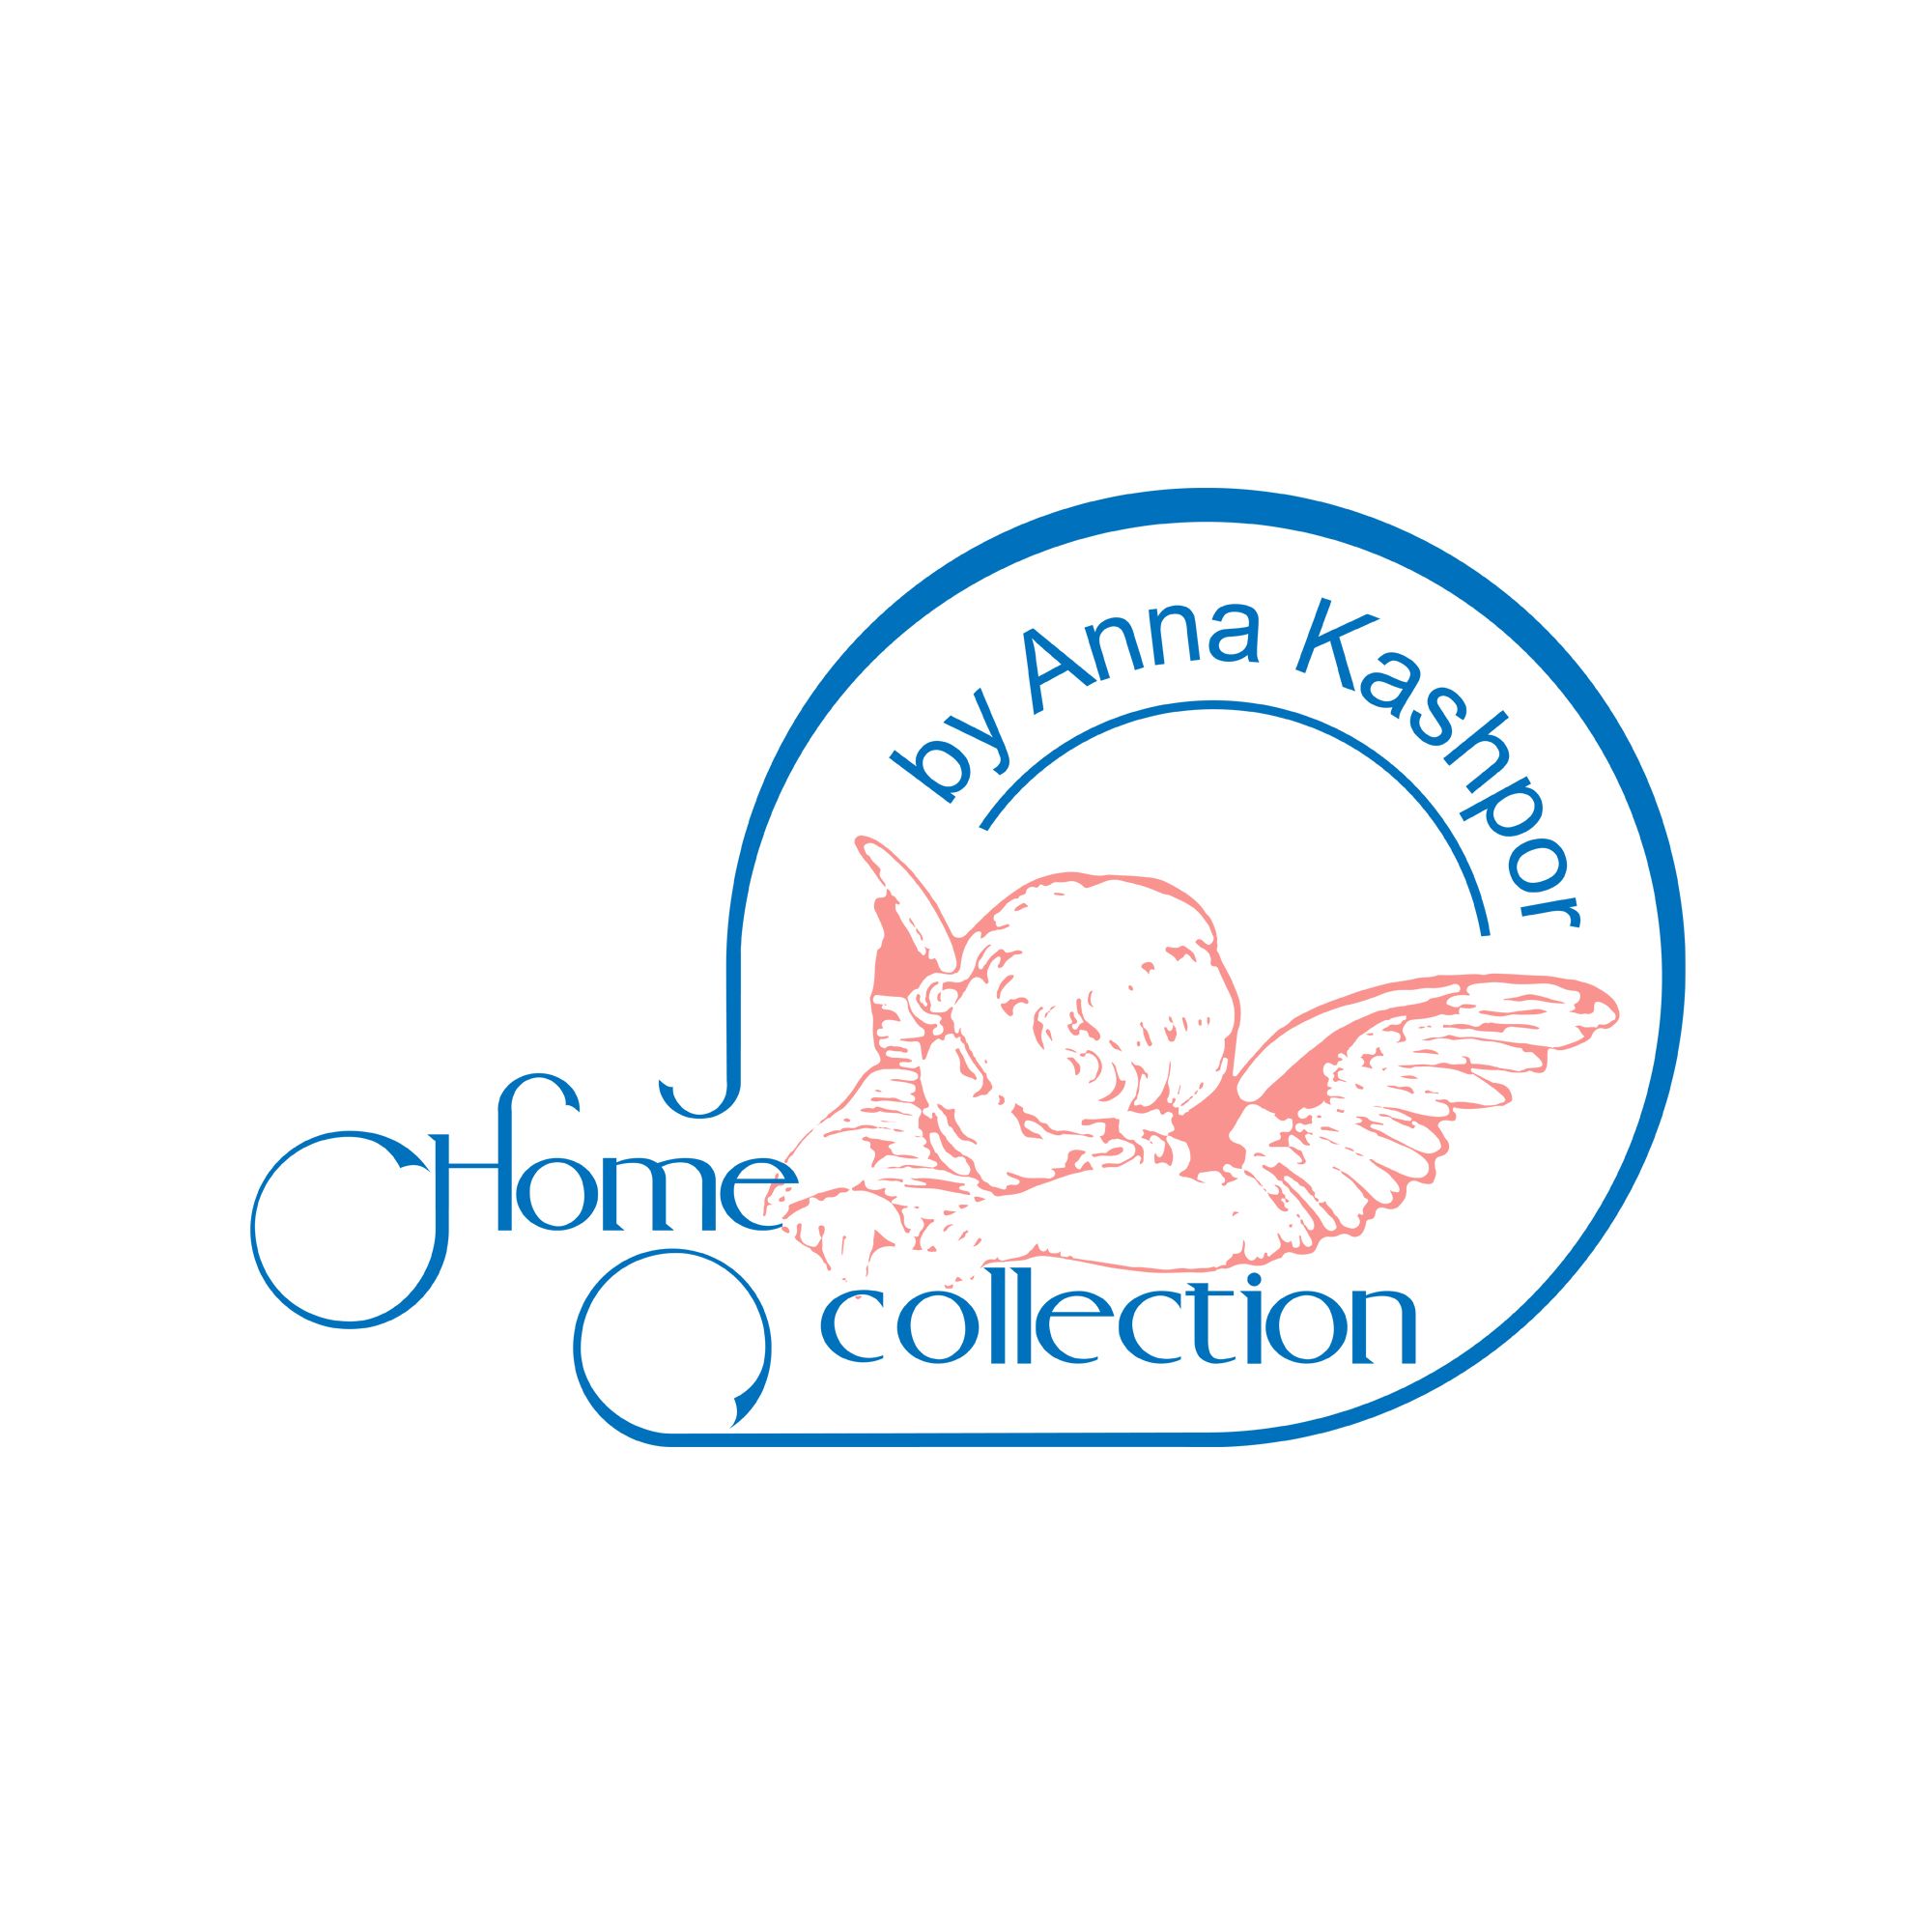 Лого и ФС для Home Collection by Anna Kashpor - дизайнер atmannn